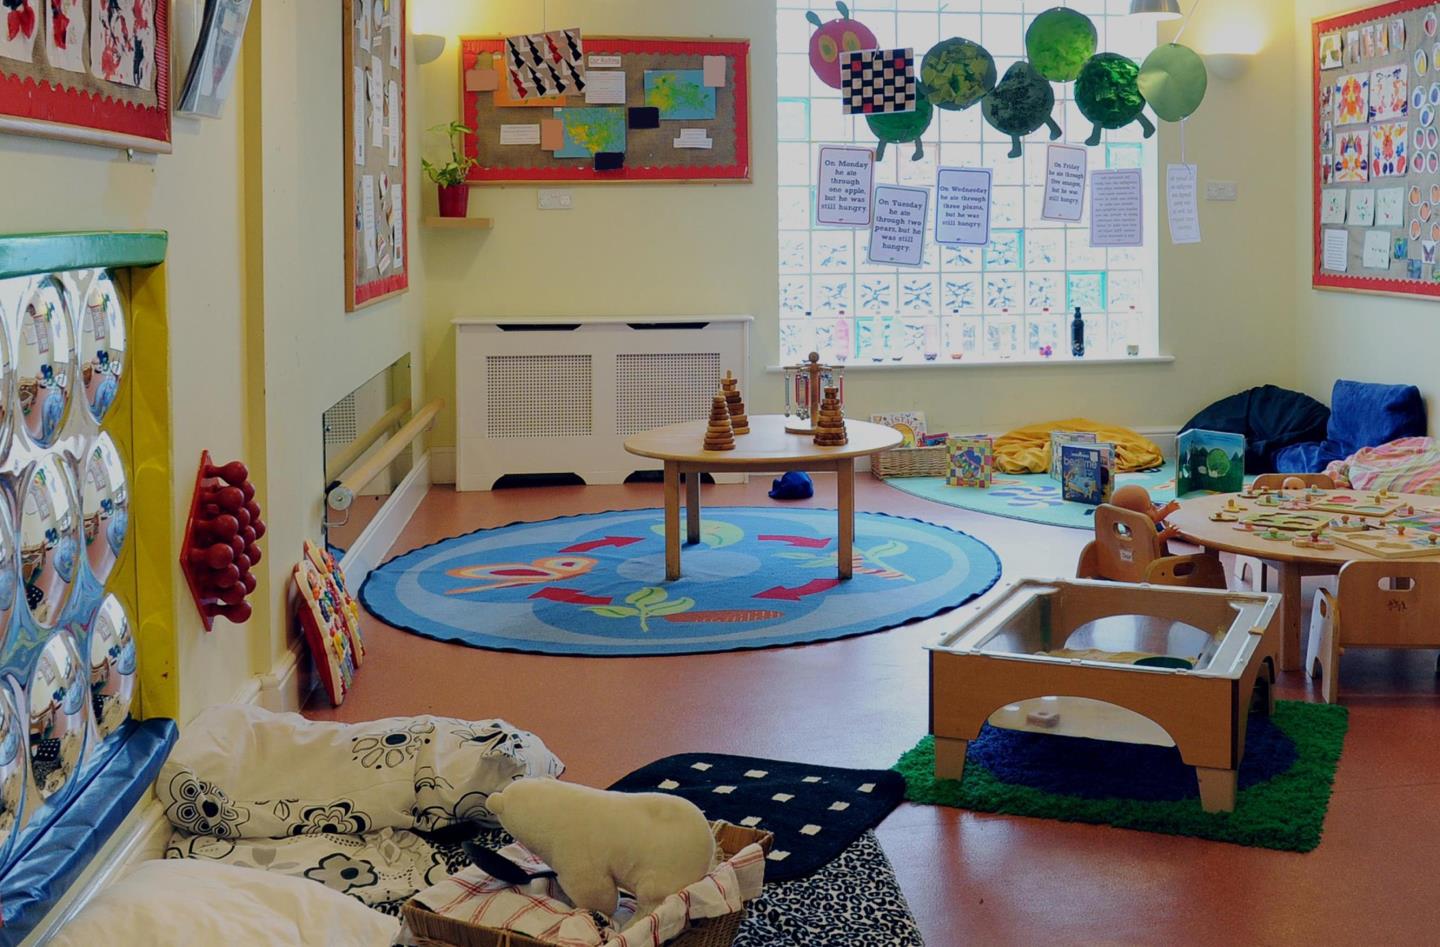 Bright Horizons Elm Grove Day Nursery and Preschool Kingston Upon Thames 03332 204506